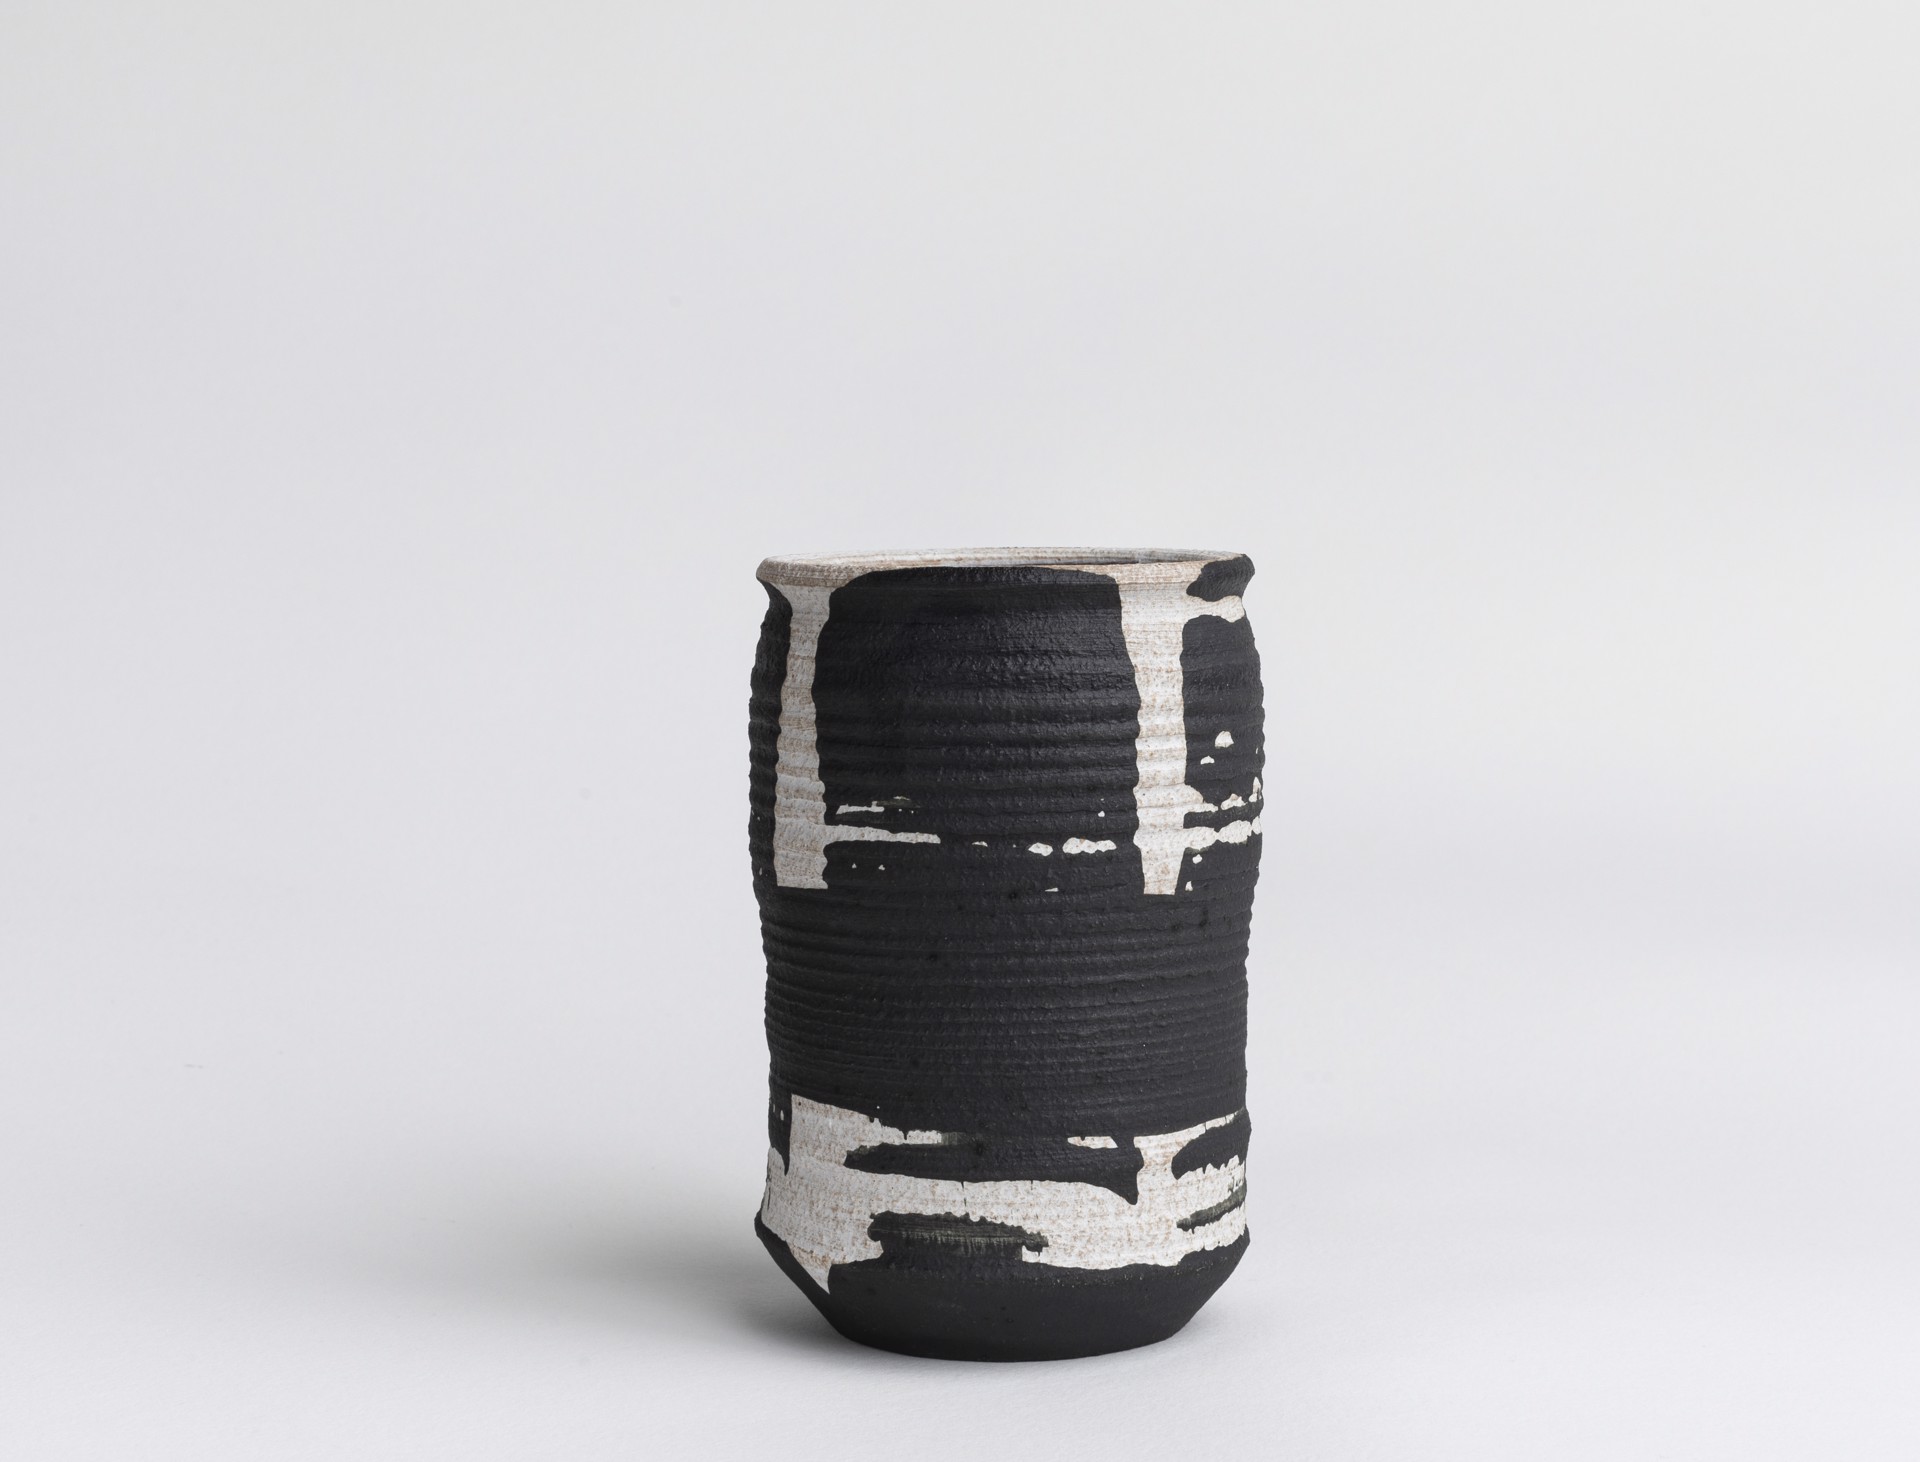 B&W Striped Tumbler Vase V by Glory Day Loflin Ceramics